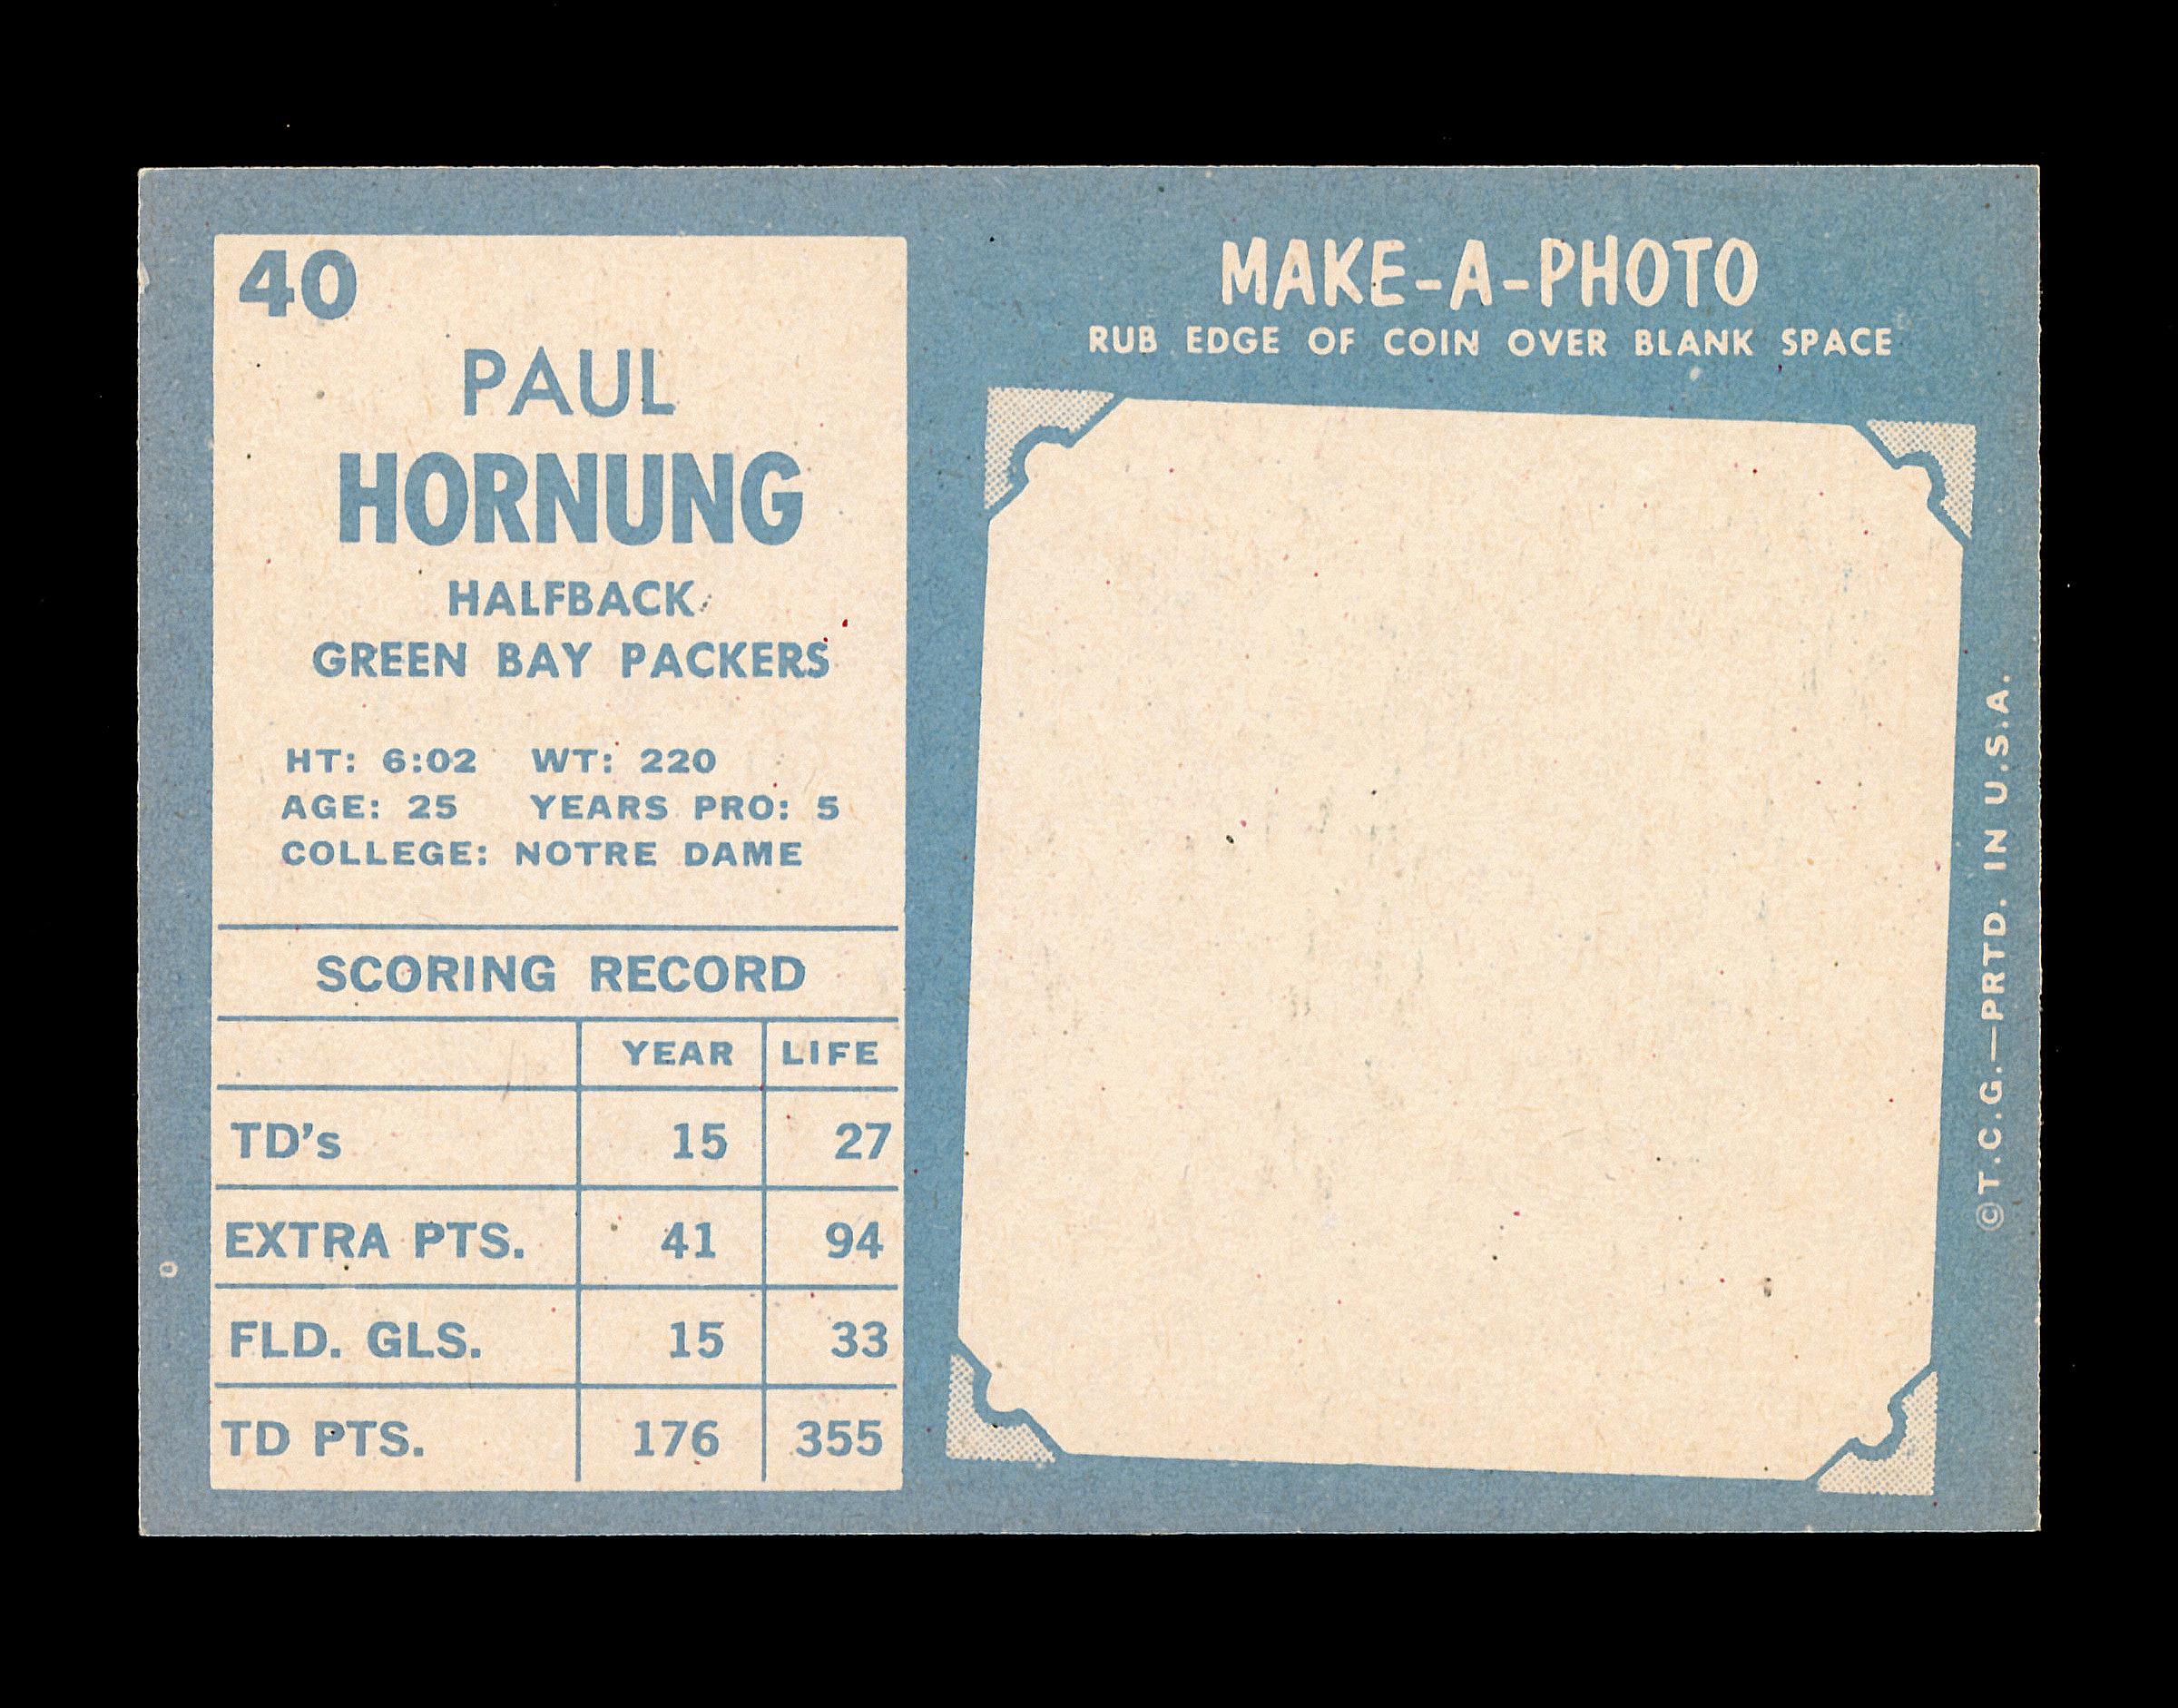 1961 Topps Football Card #40 Hall of Famer Paul Hornung Green Bay Packers.